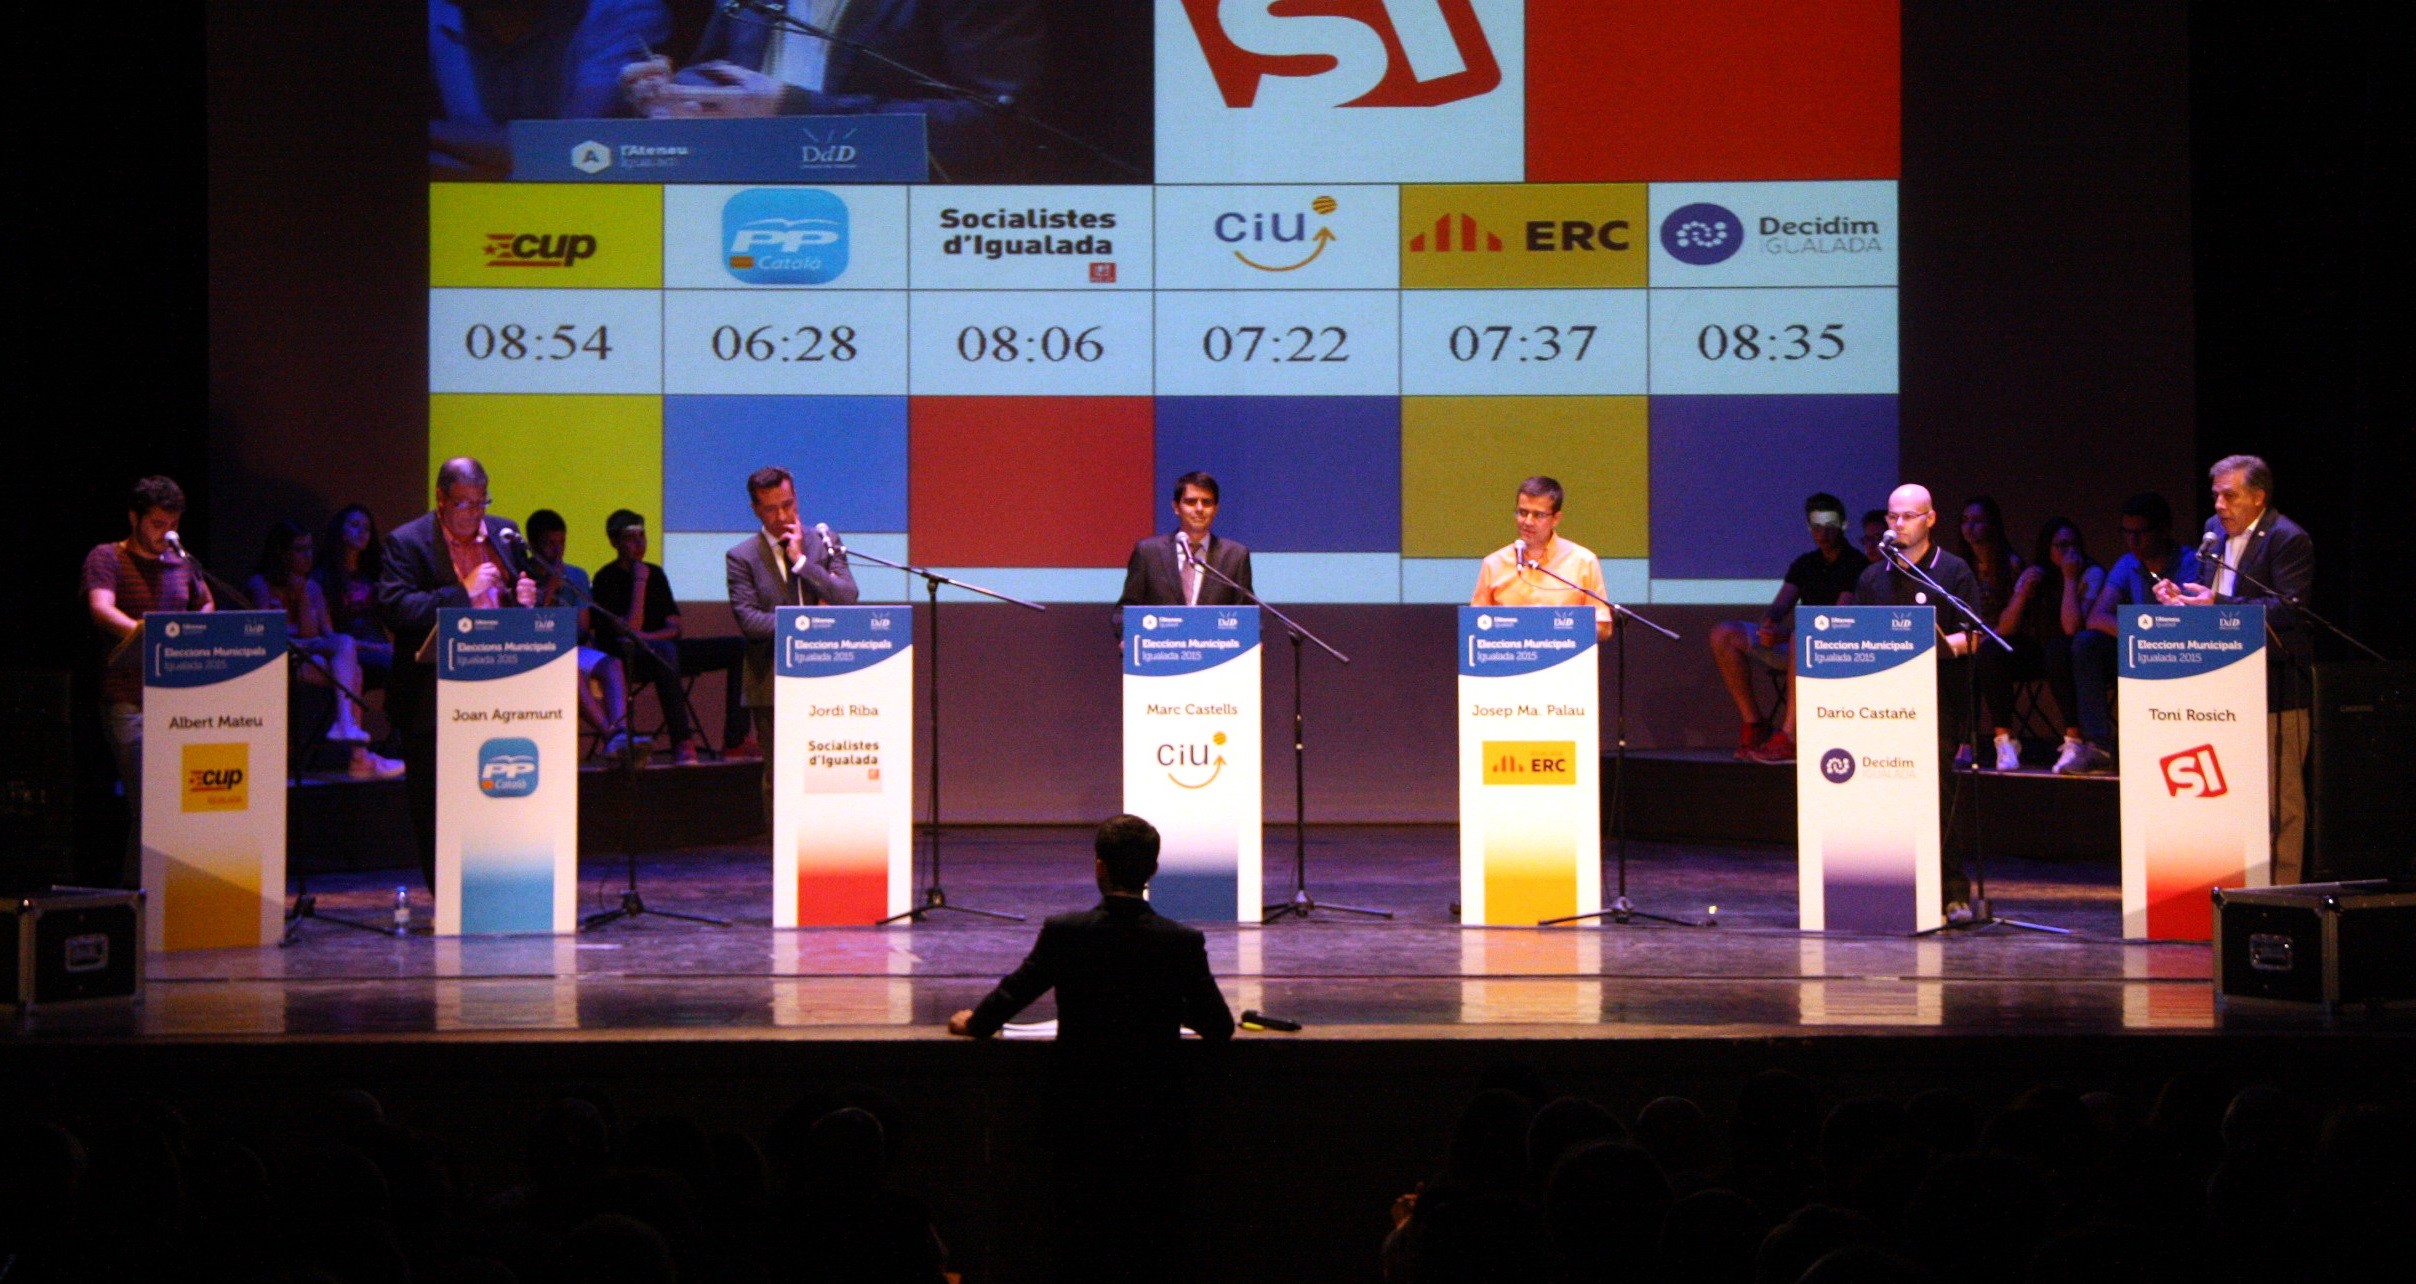 Foto Debat Candidat Ateneu Igualadí 2015